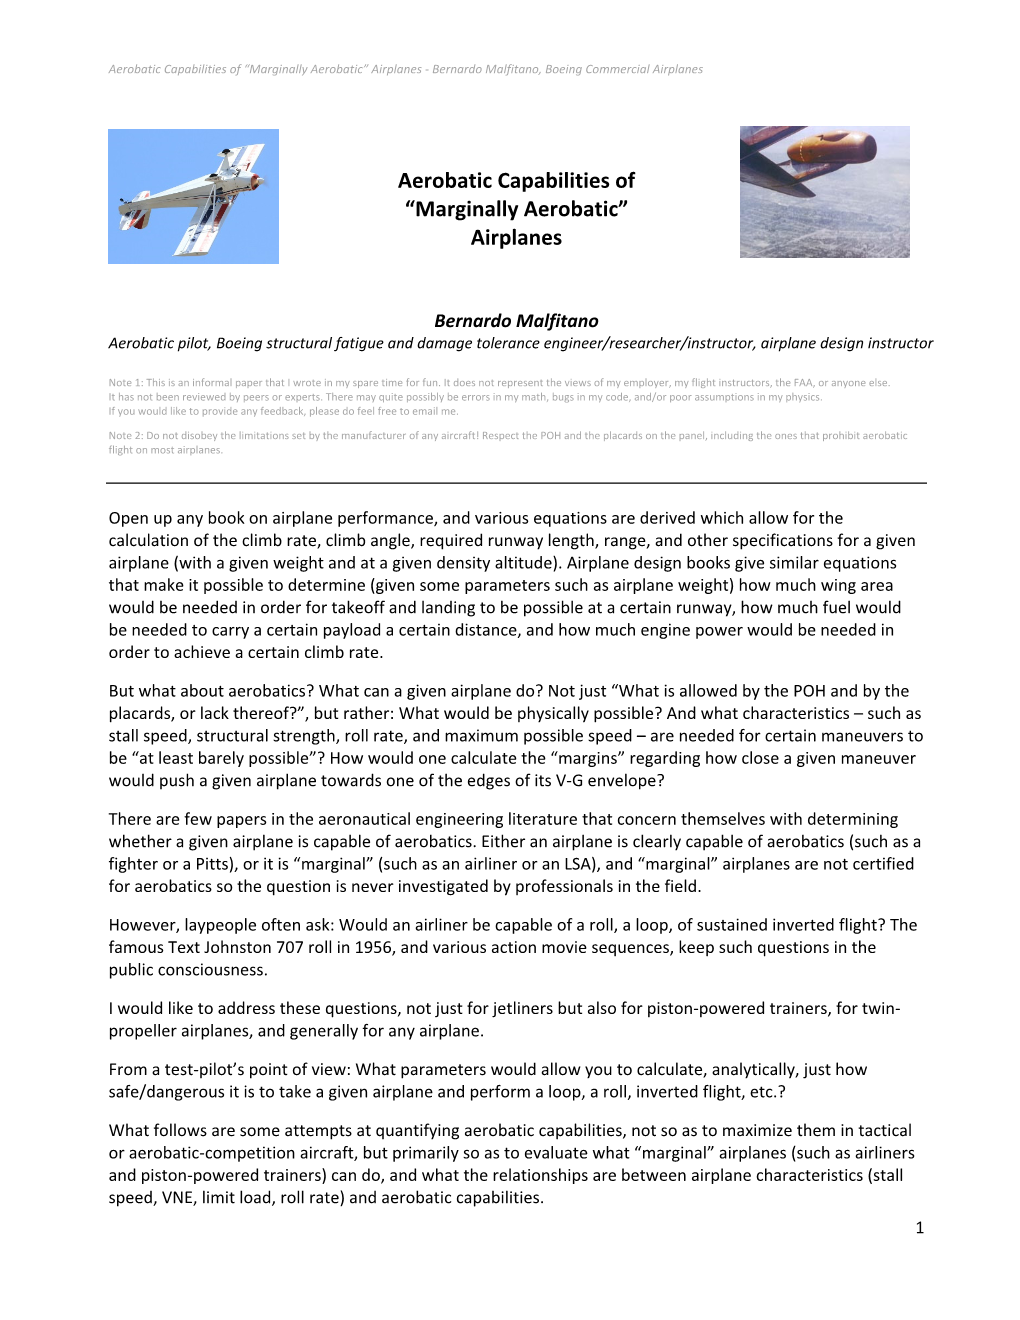 Aerobatics Analysis